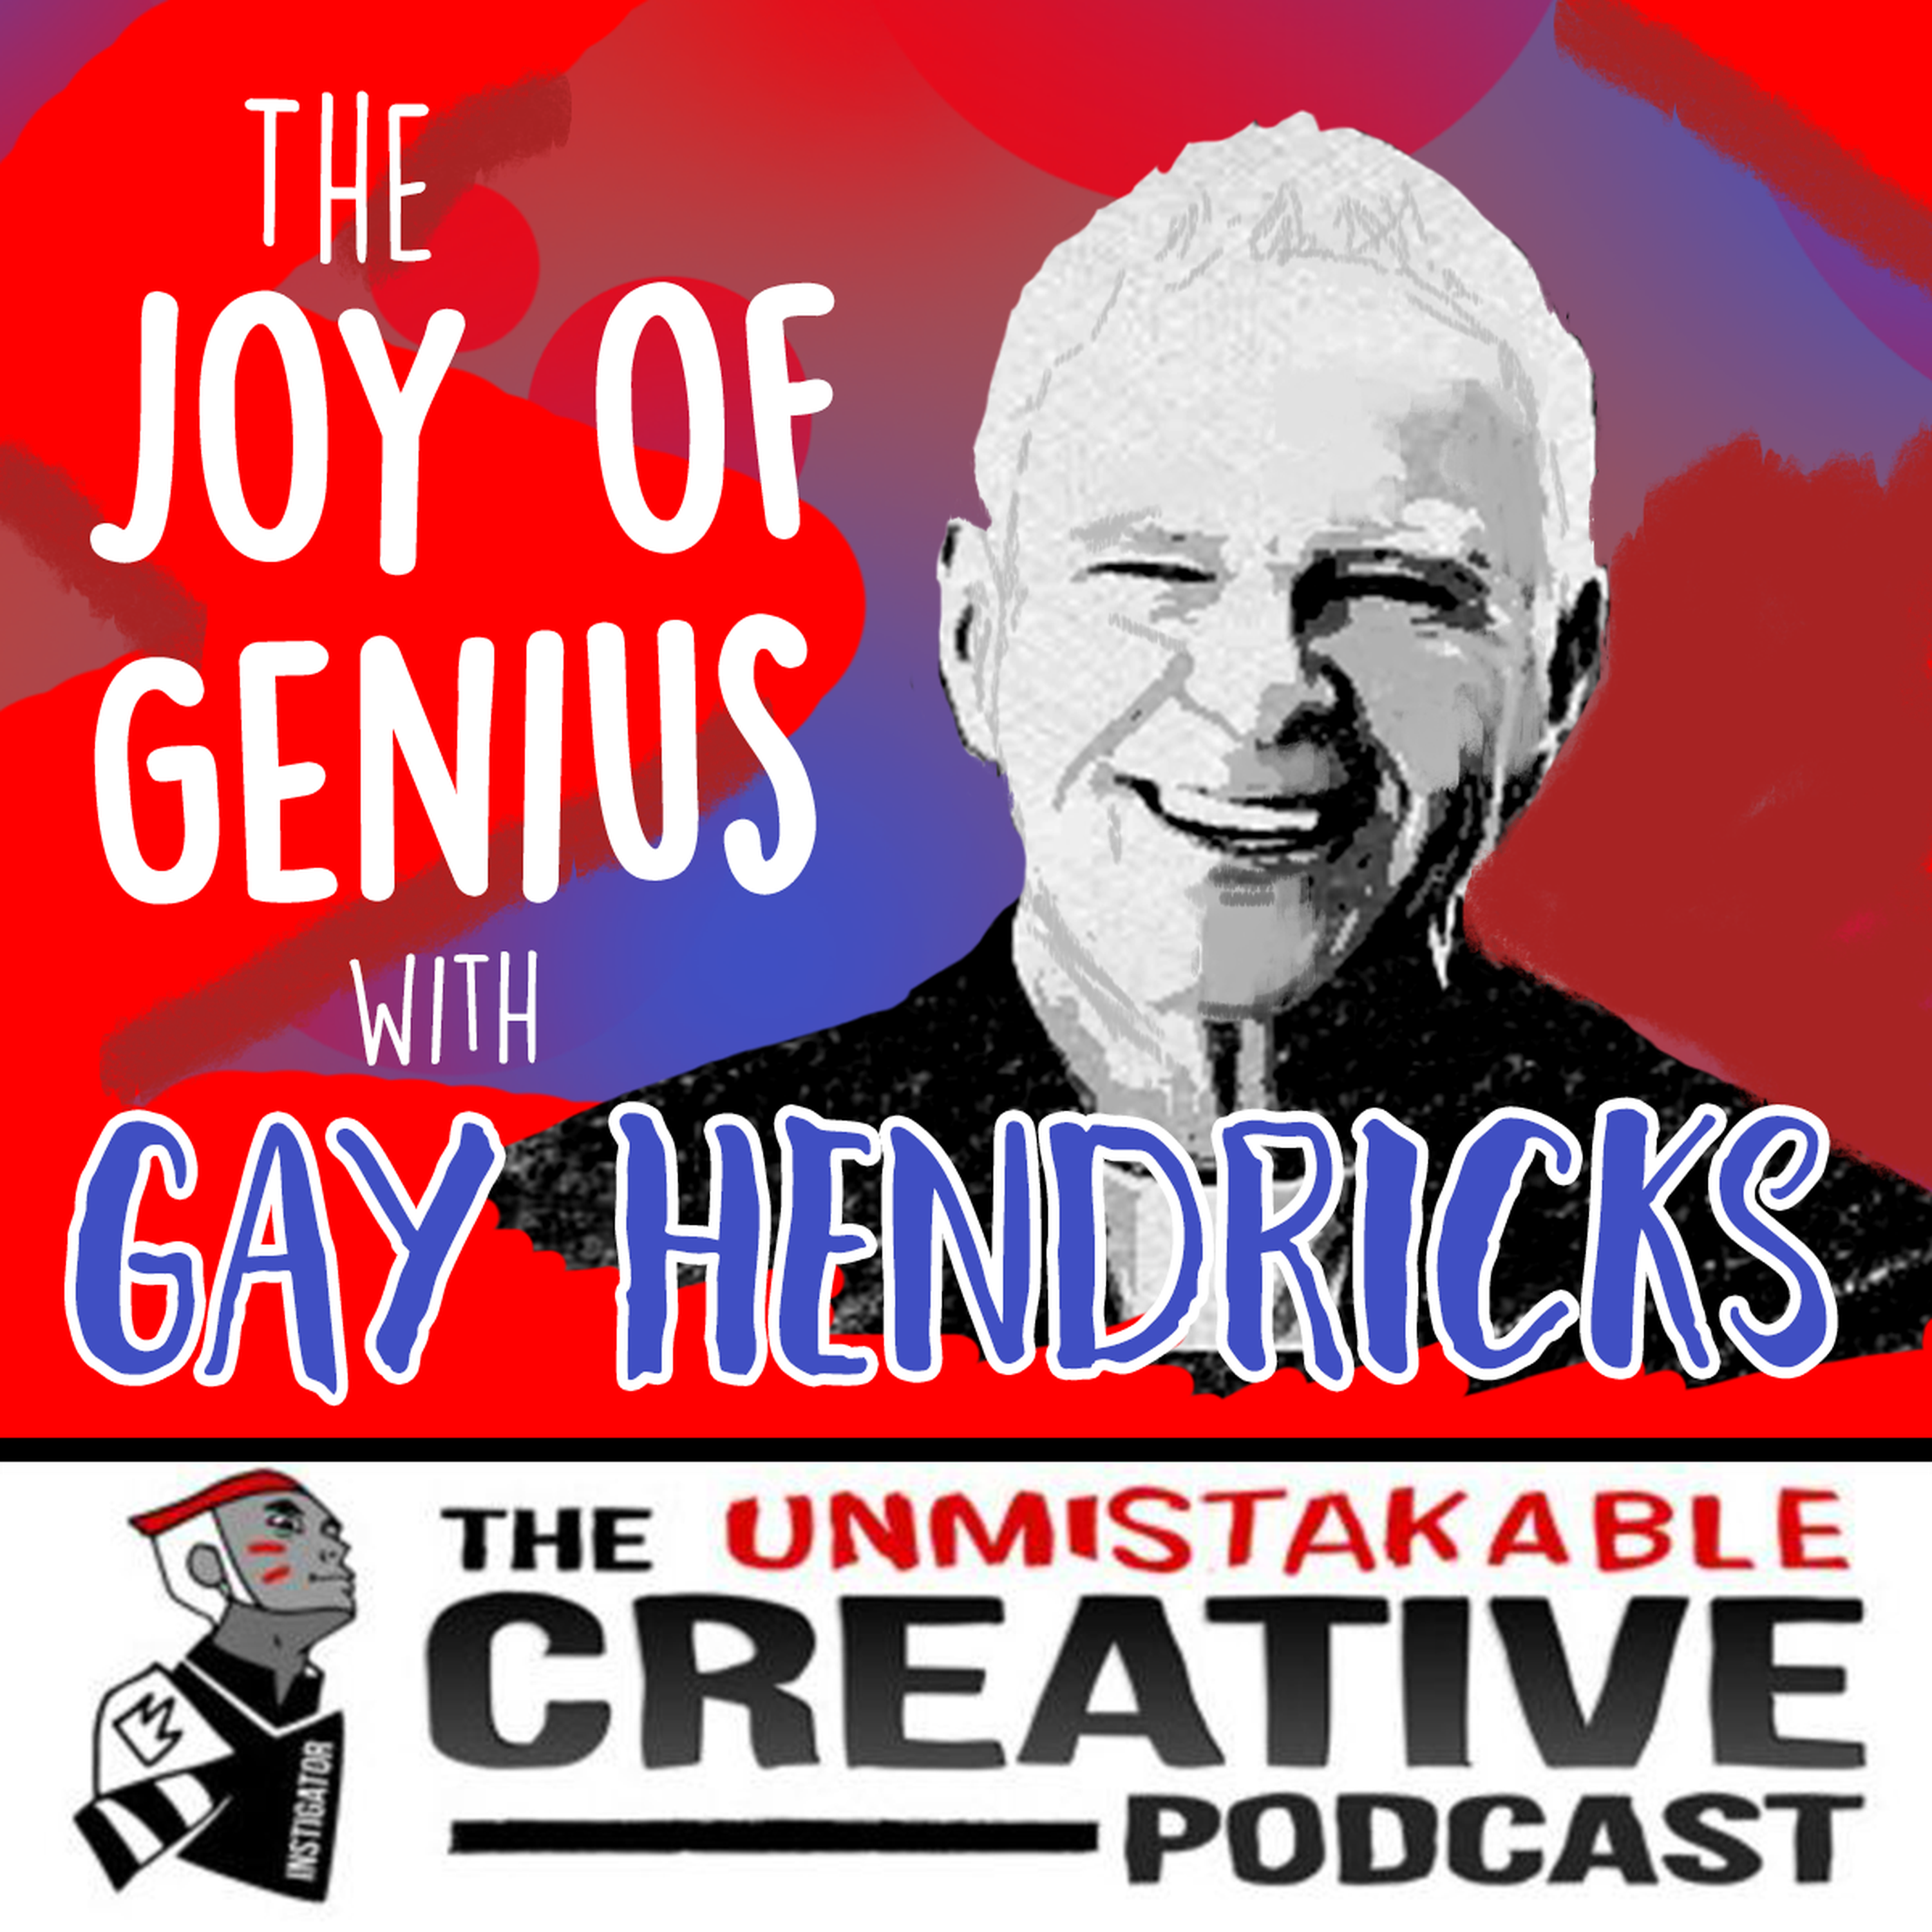 The Joy of Genius with Gay Hendricks